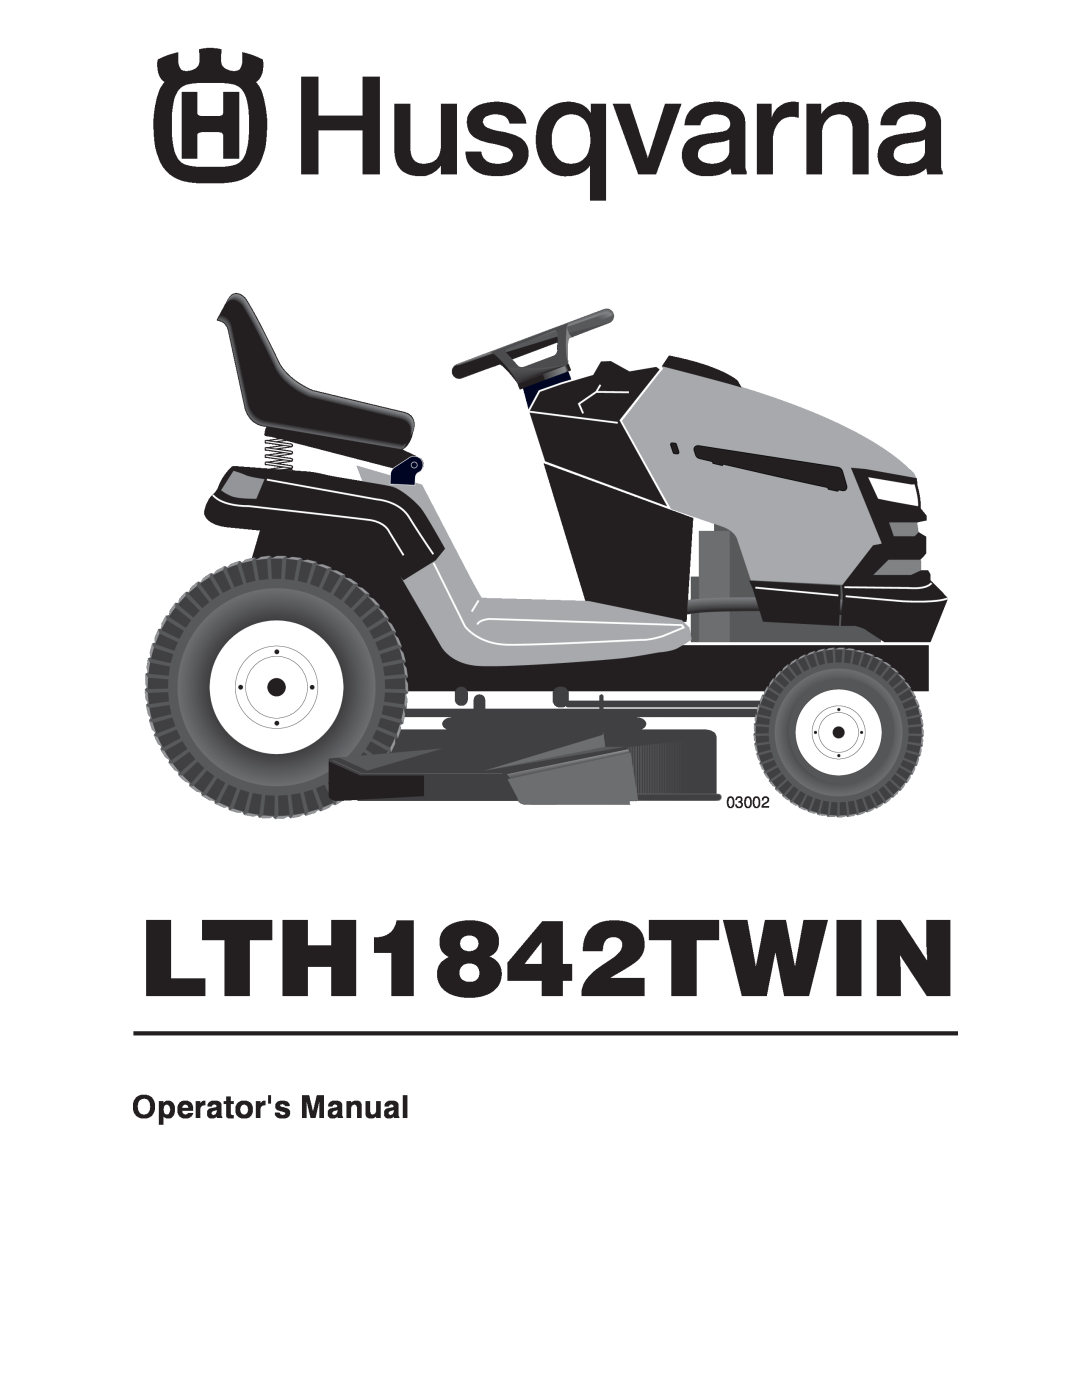 Husqvarna manual LTH1842TWIN, Operators Manual, 03002 